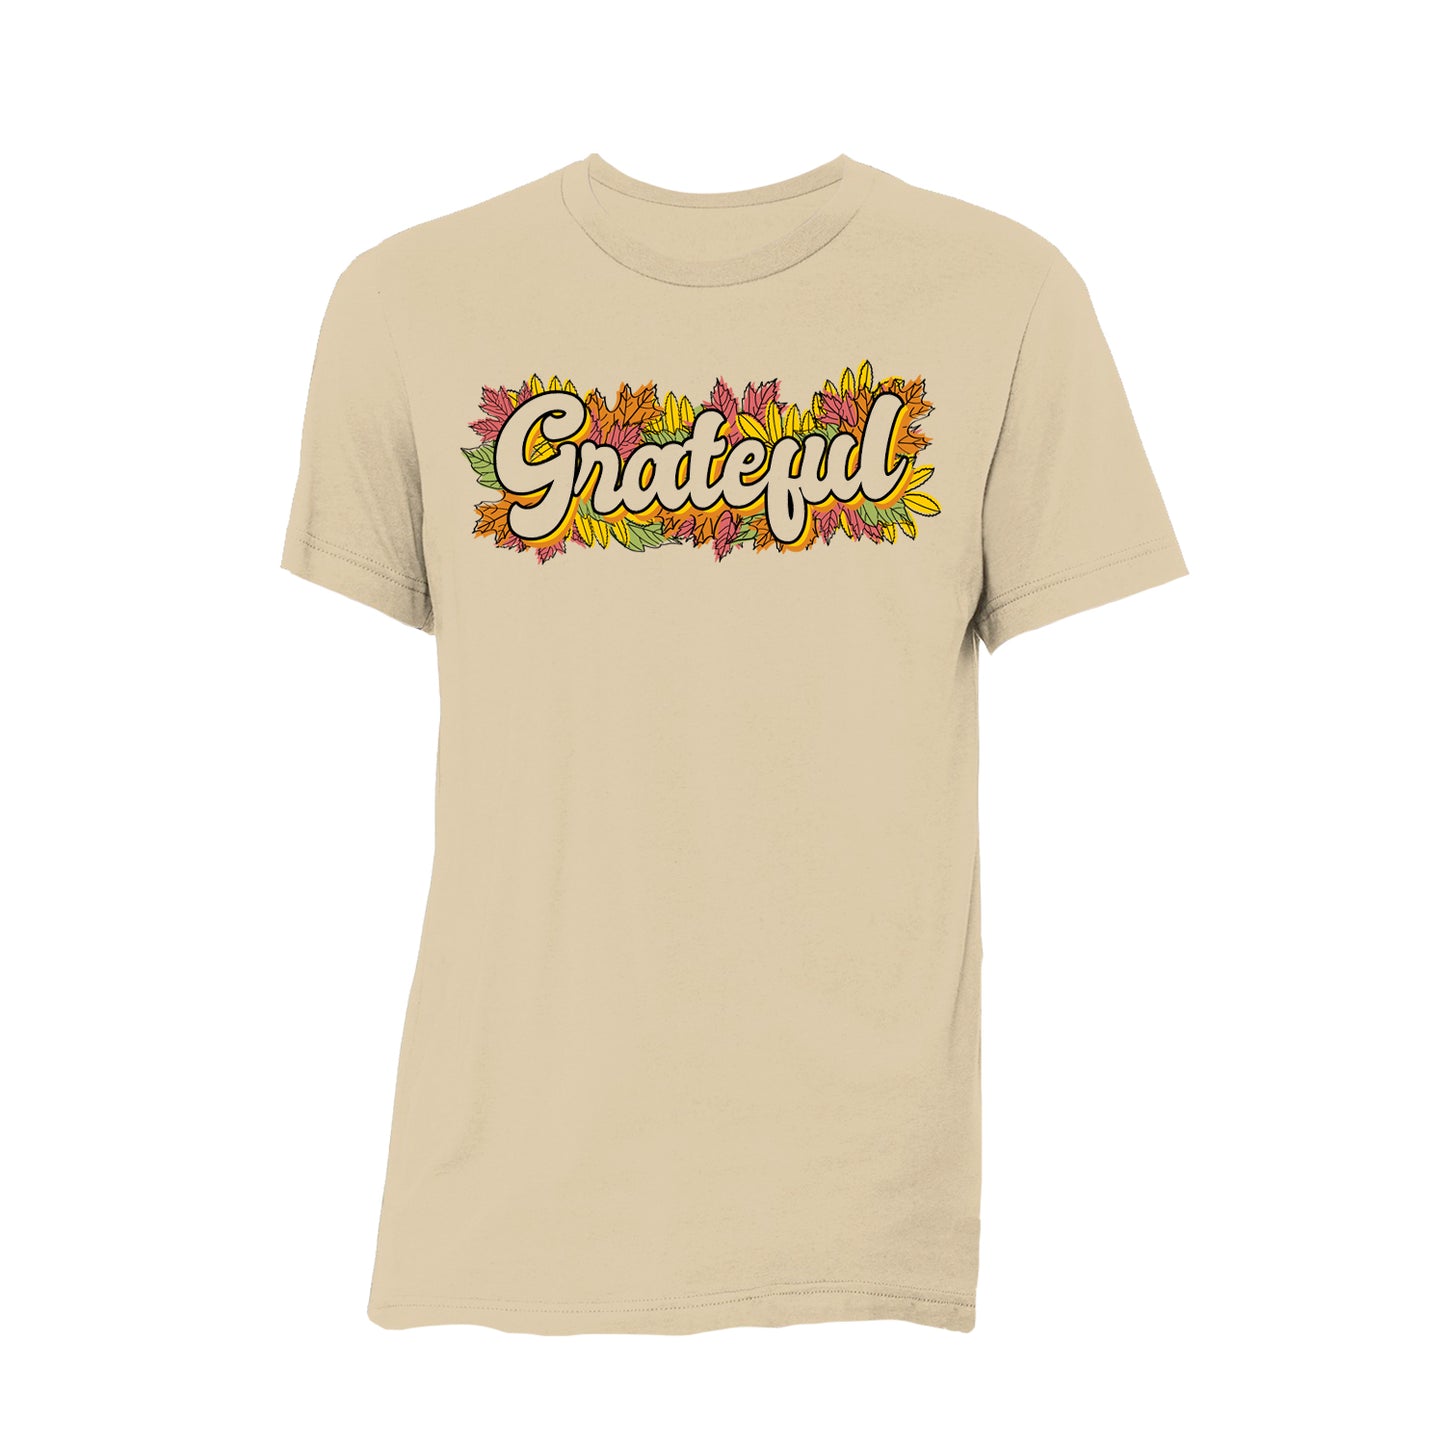 "Grateful Leaves" - T-shirt